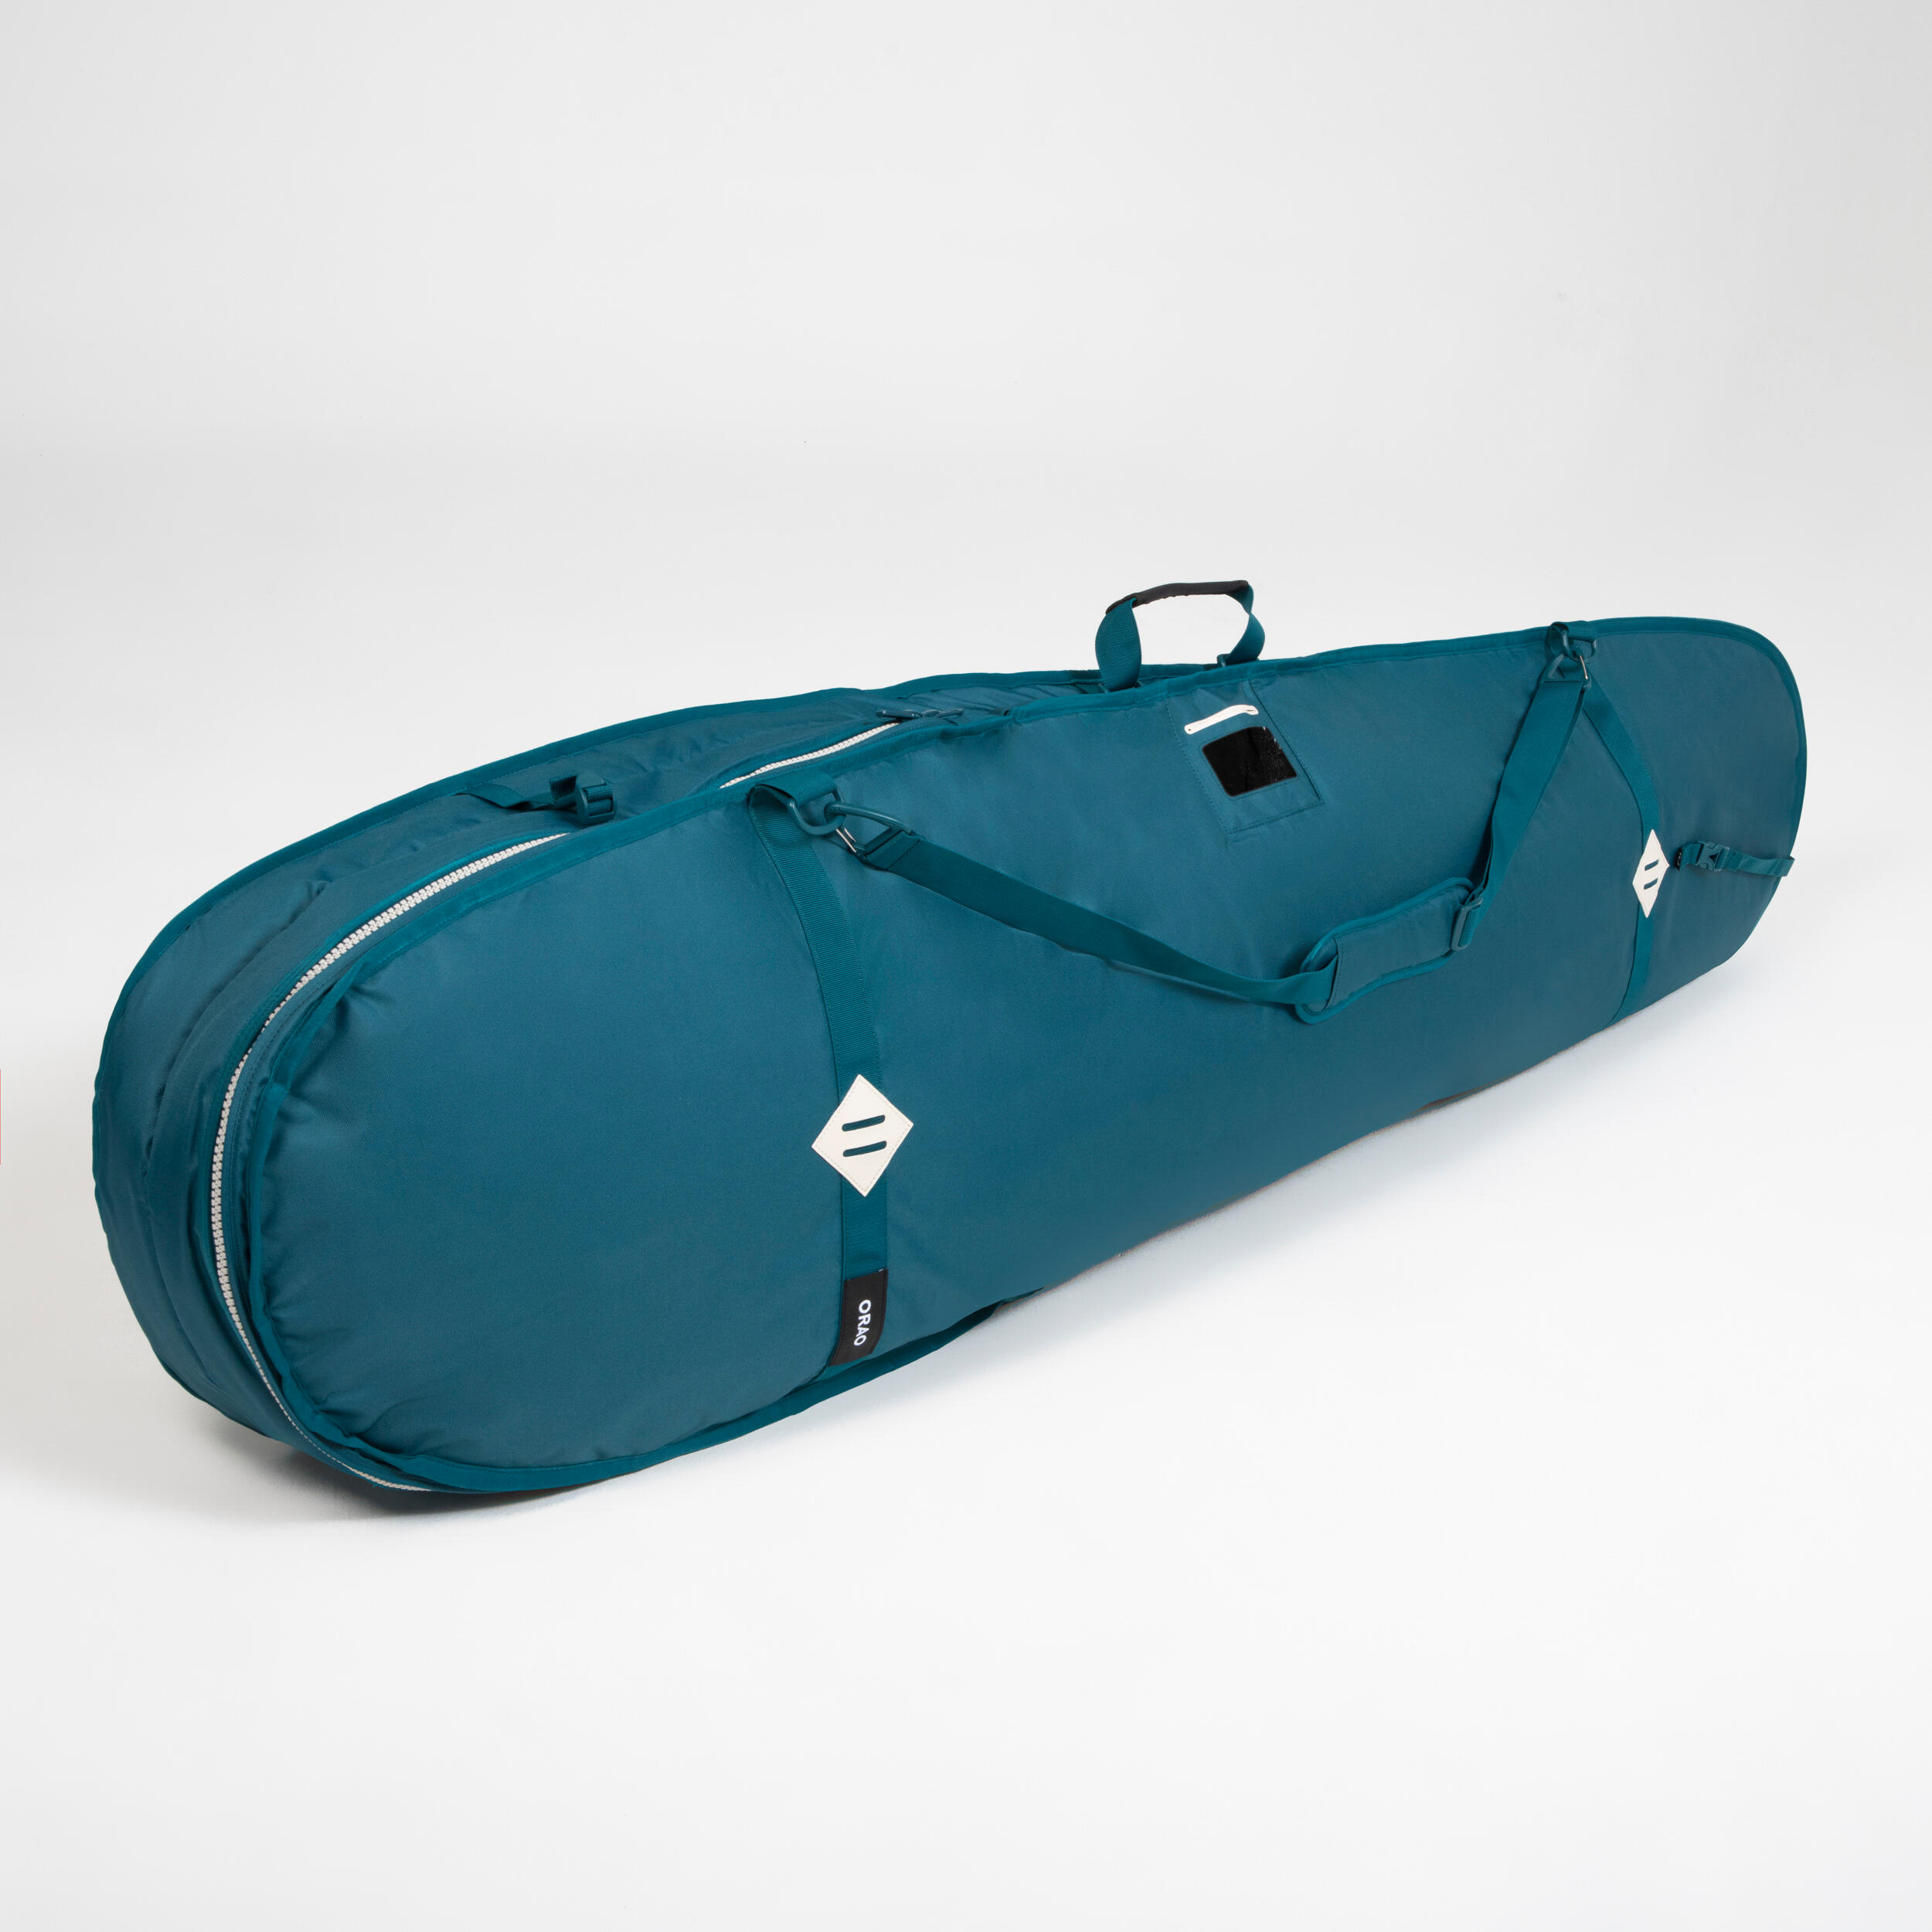 ORAO Boardbag Kitesurfen max. 183 cm petrol EINHEITSGRÖSSE